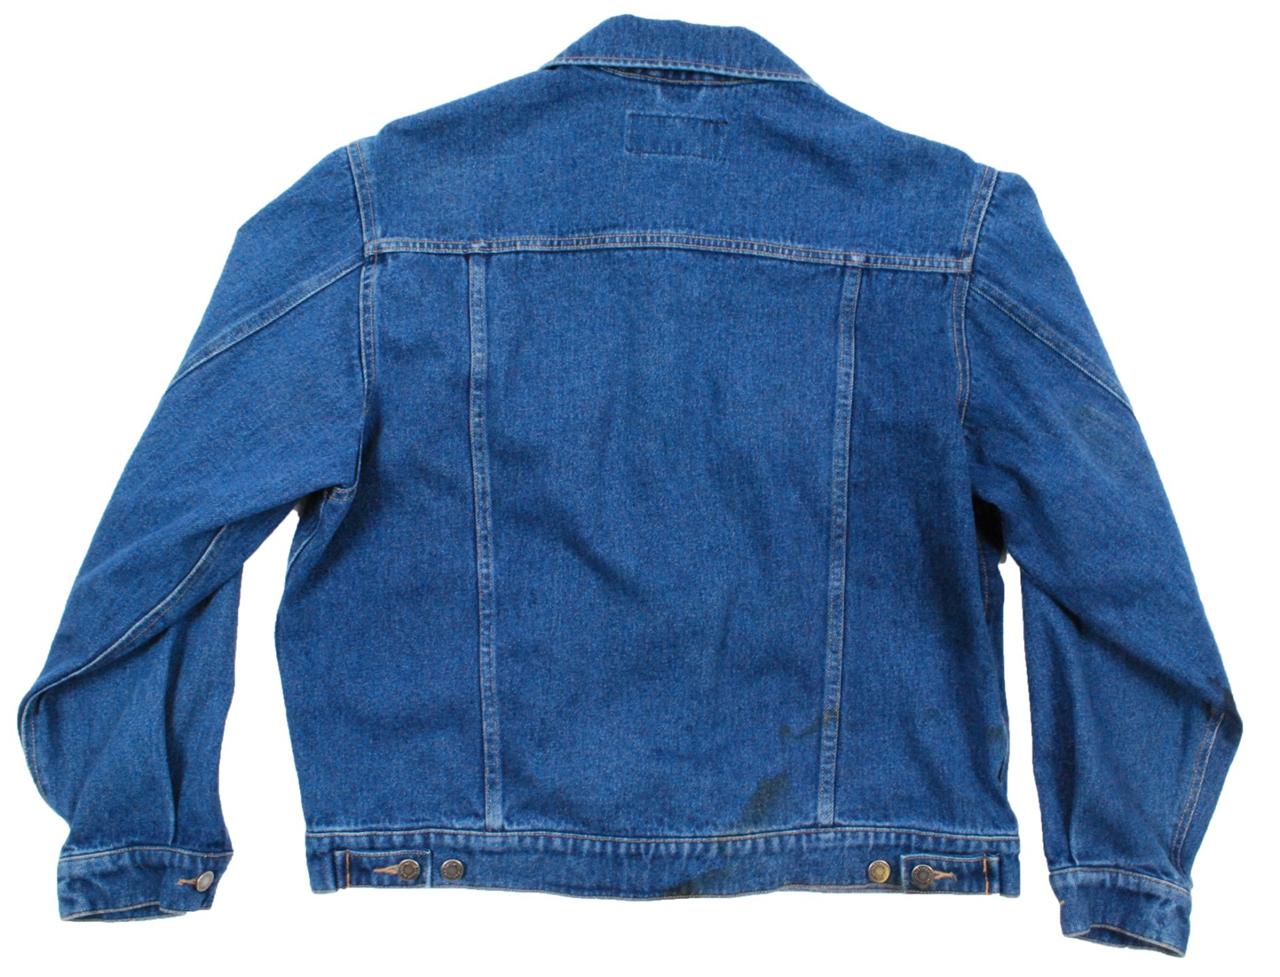 Vintage Wrangler Hero denim jean jacket - Large L | eBay